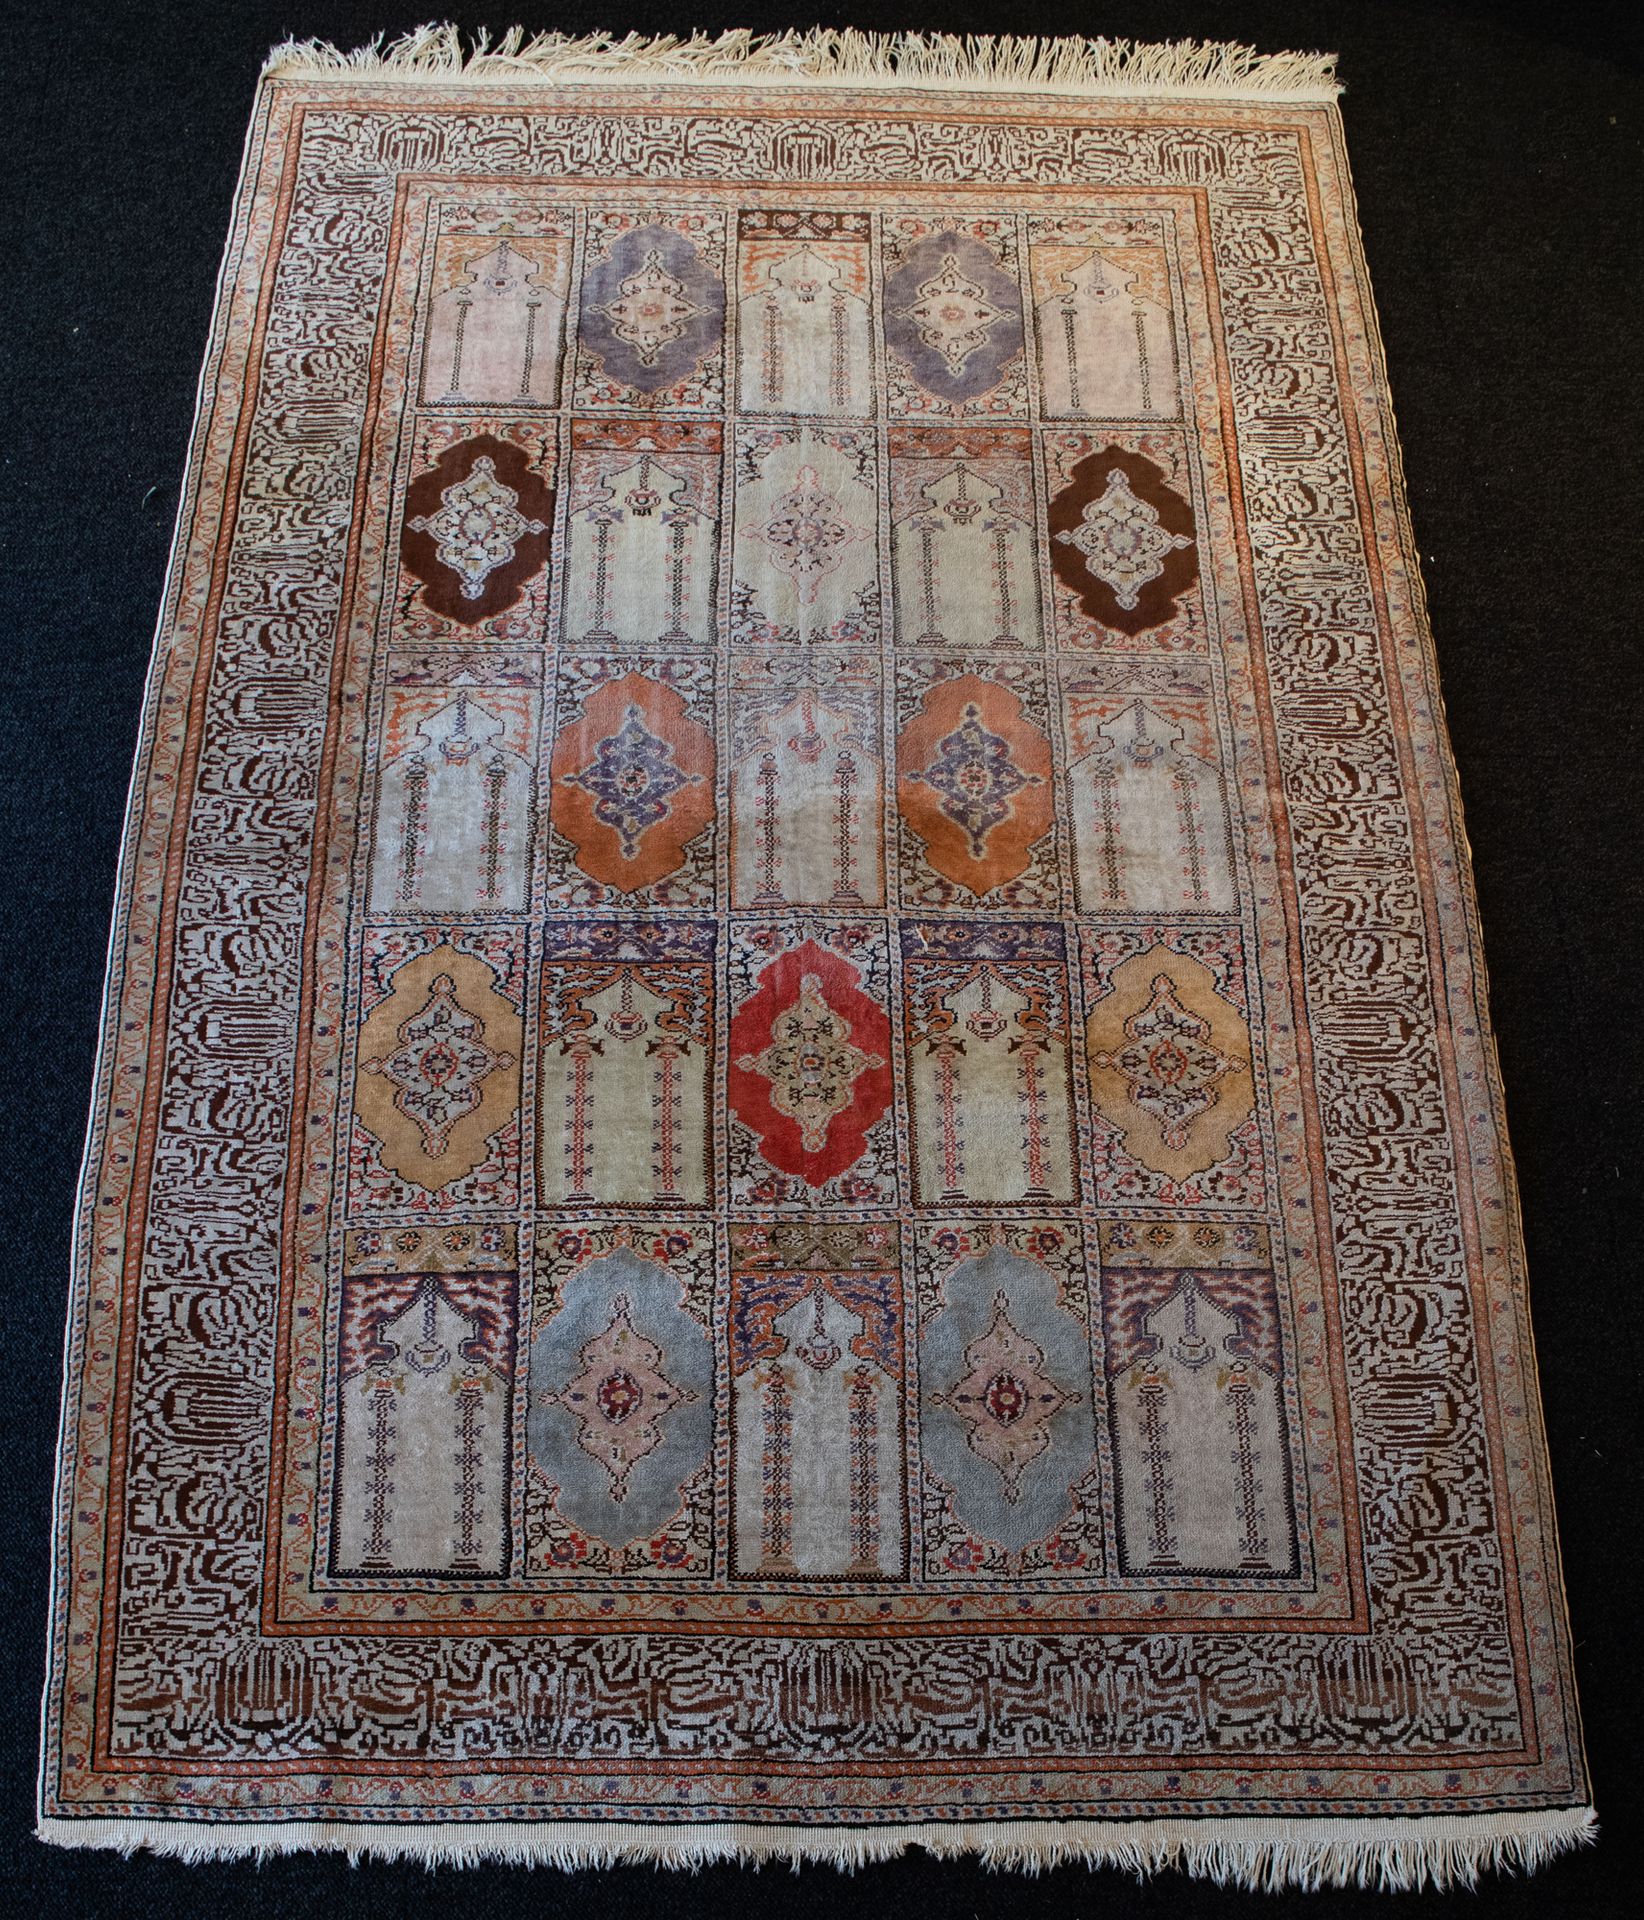 Null Silk carpet Kayser
Silk carpet Kayser Zijden tapijt Kayser. 190 x 120 cm
19&hellip;